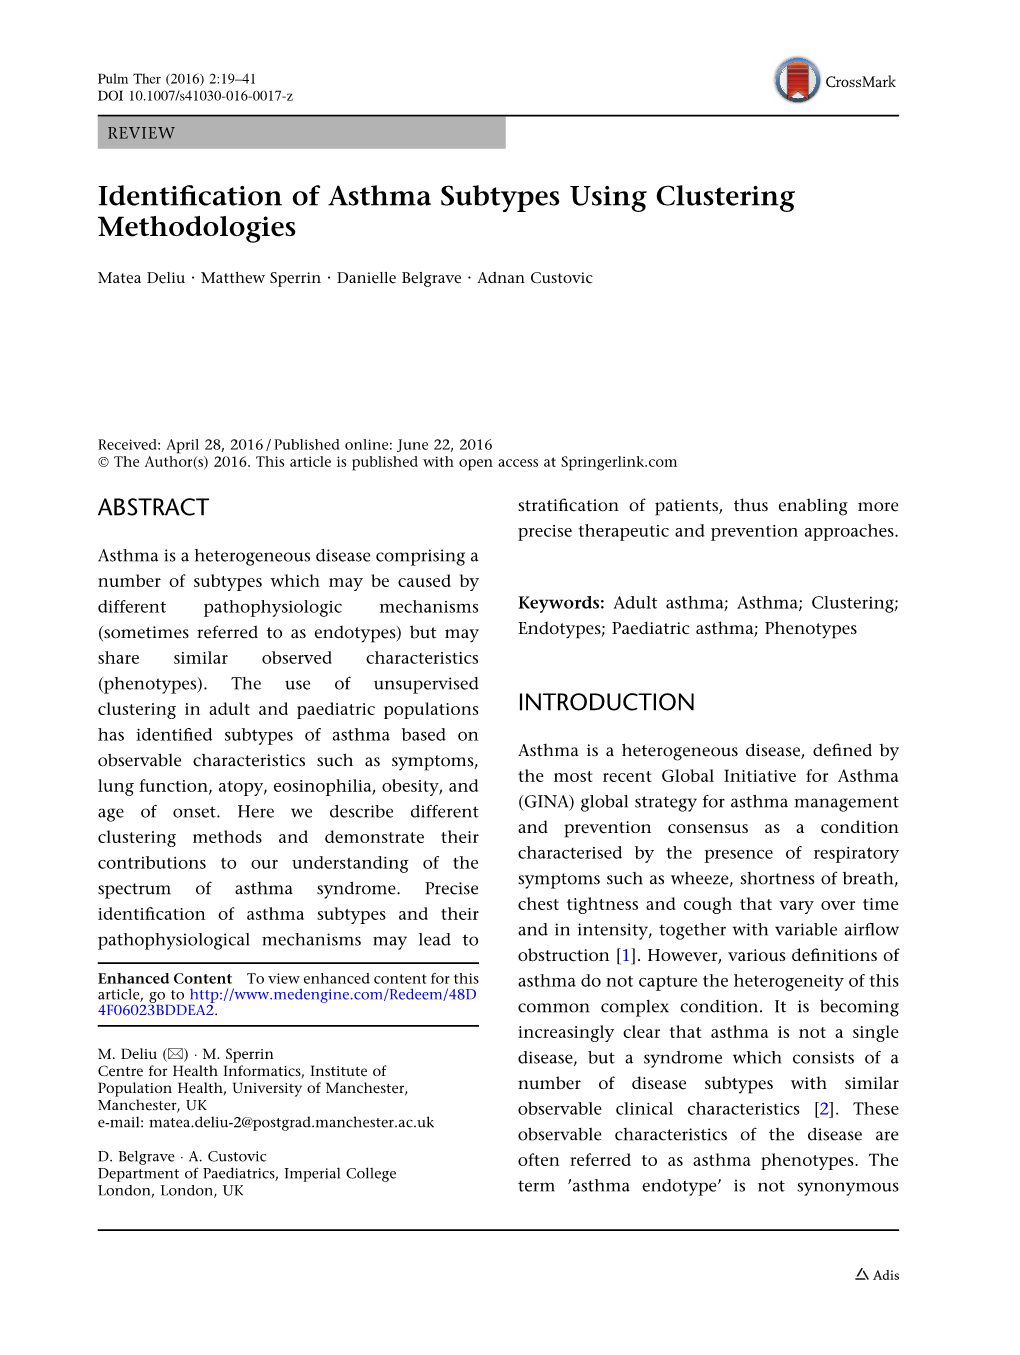 Identification of Asthma Subtypes Using Clustering Methodologies